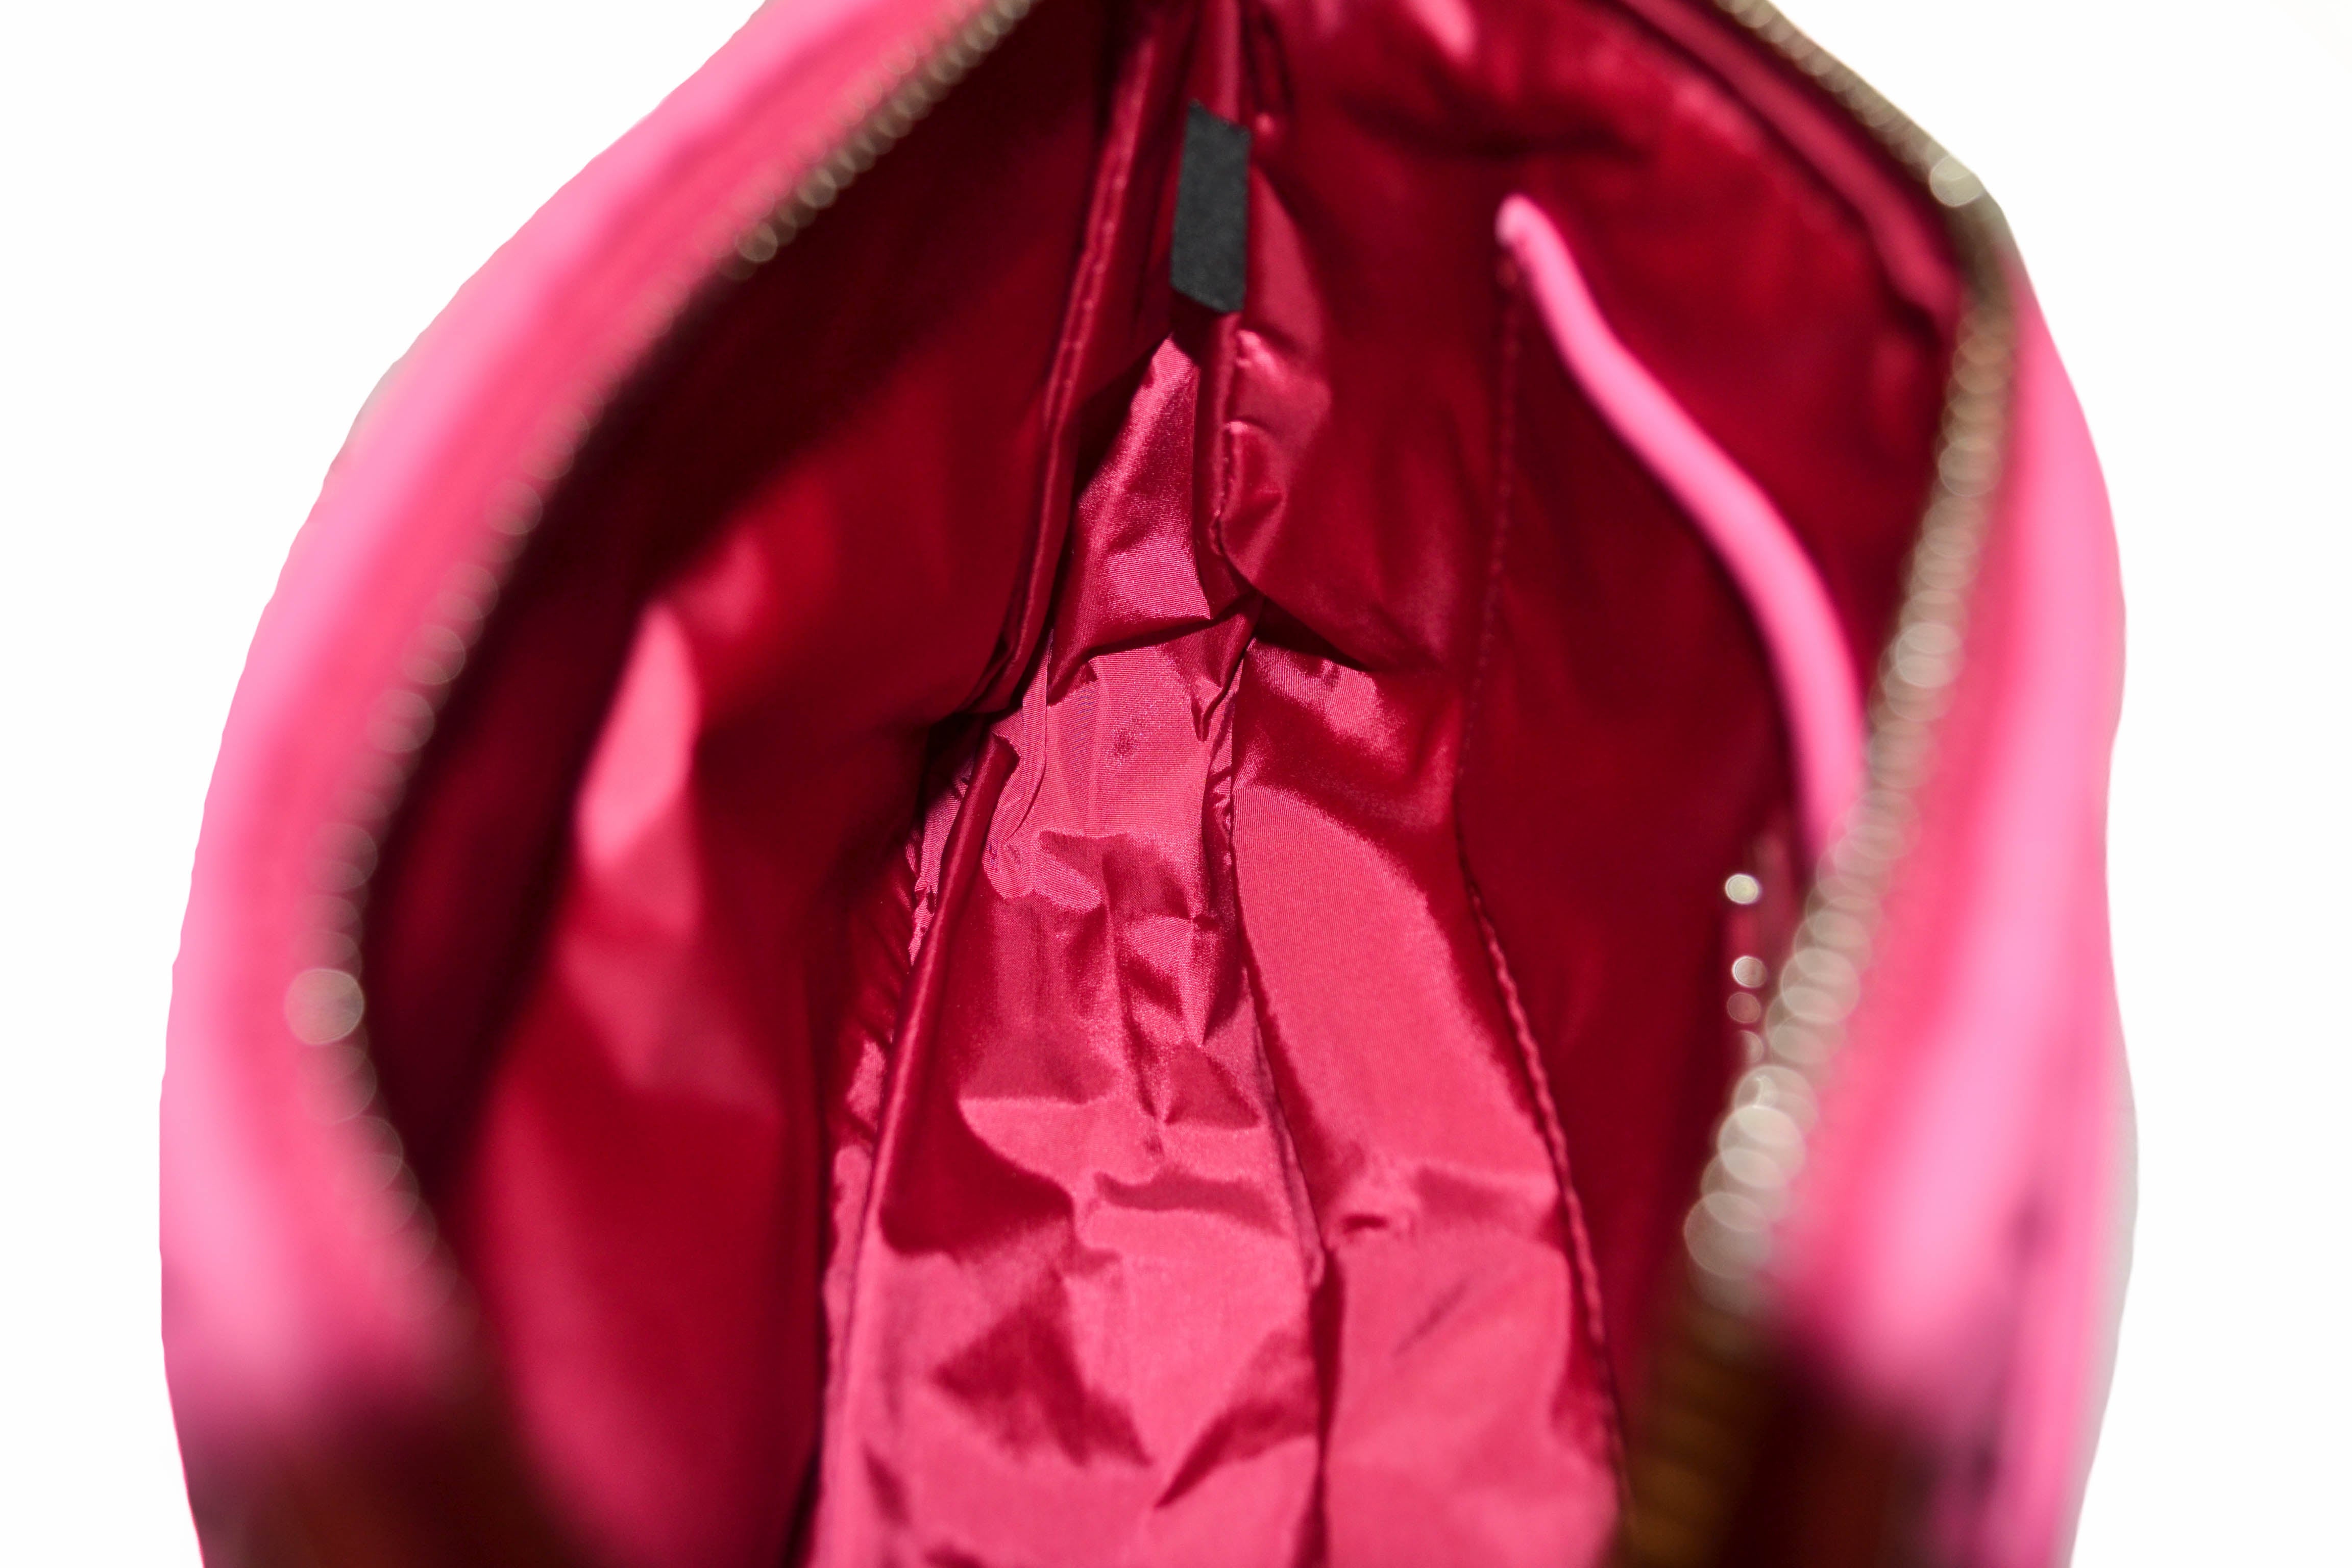 Vimoda Paris pink hair fur gray leather zipper bag wristlet clutch